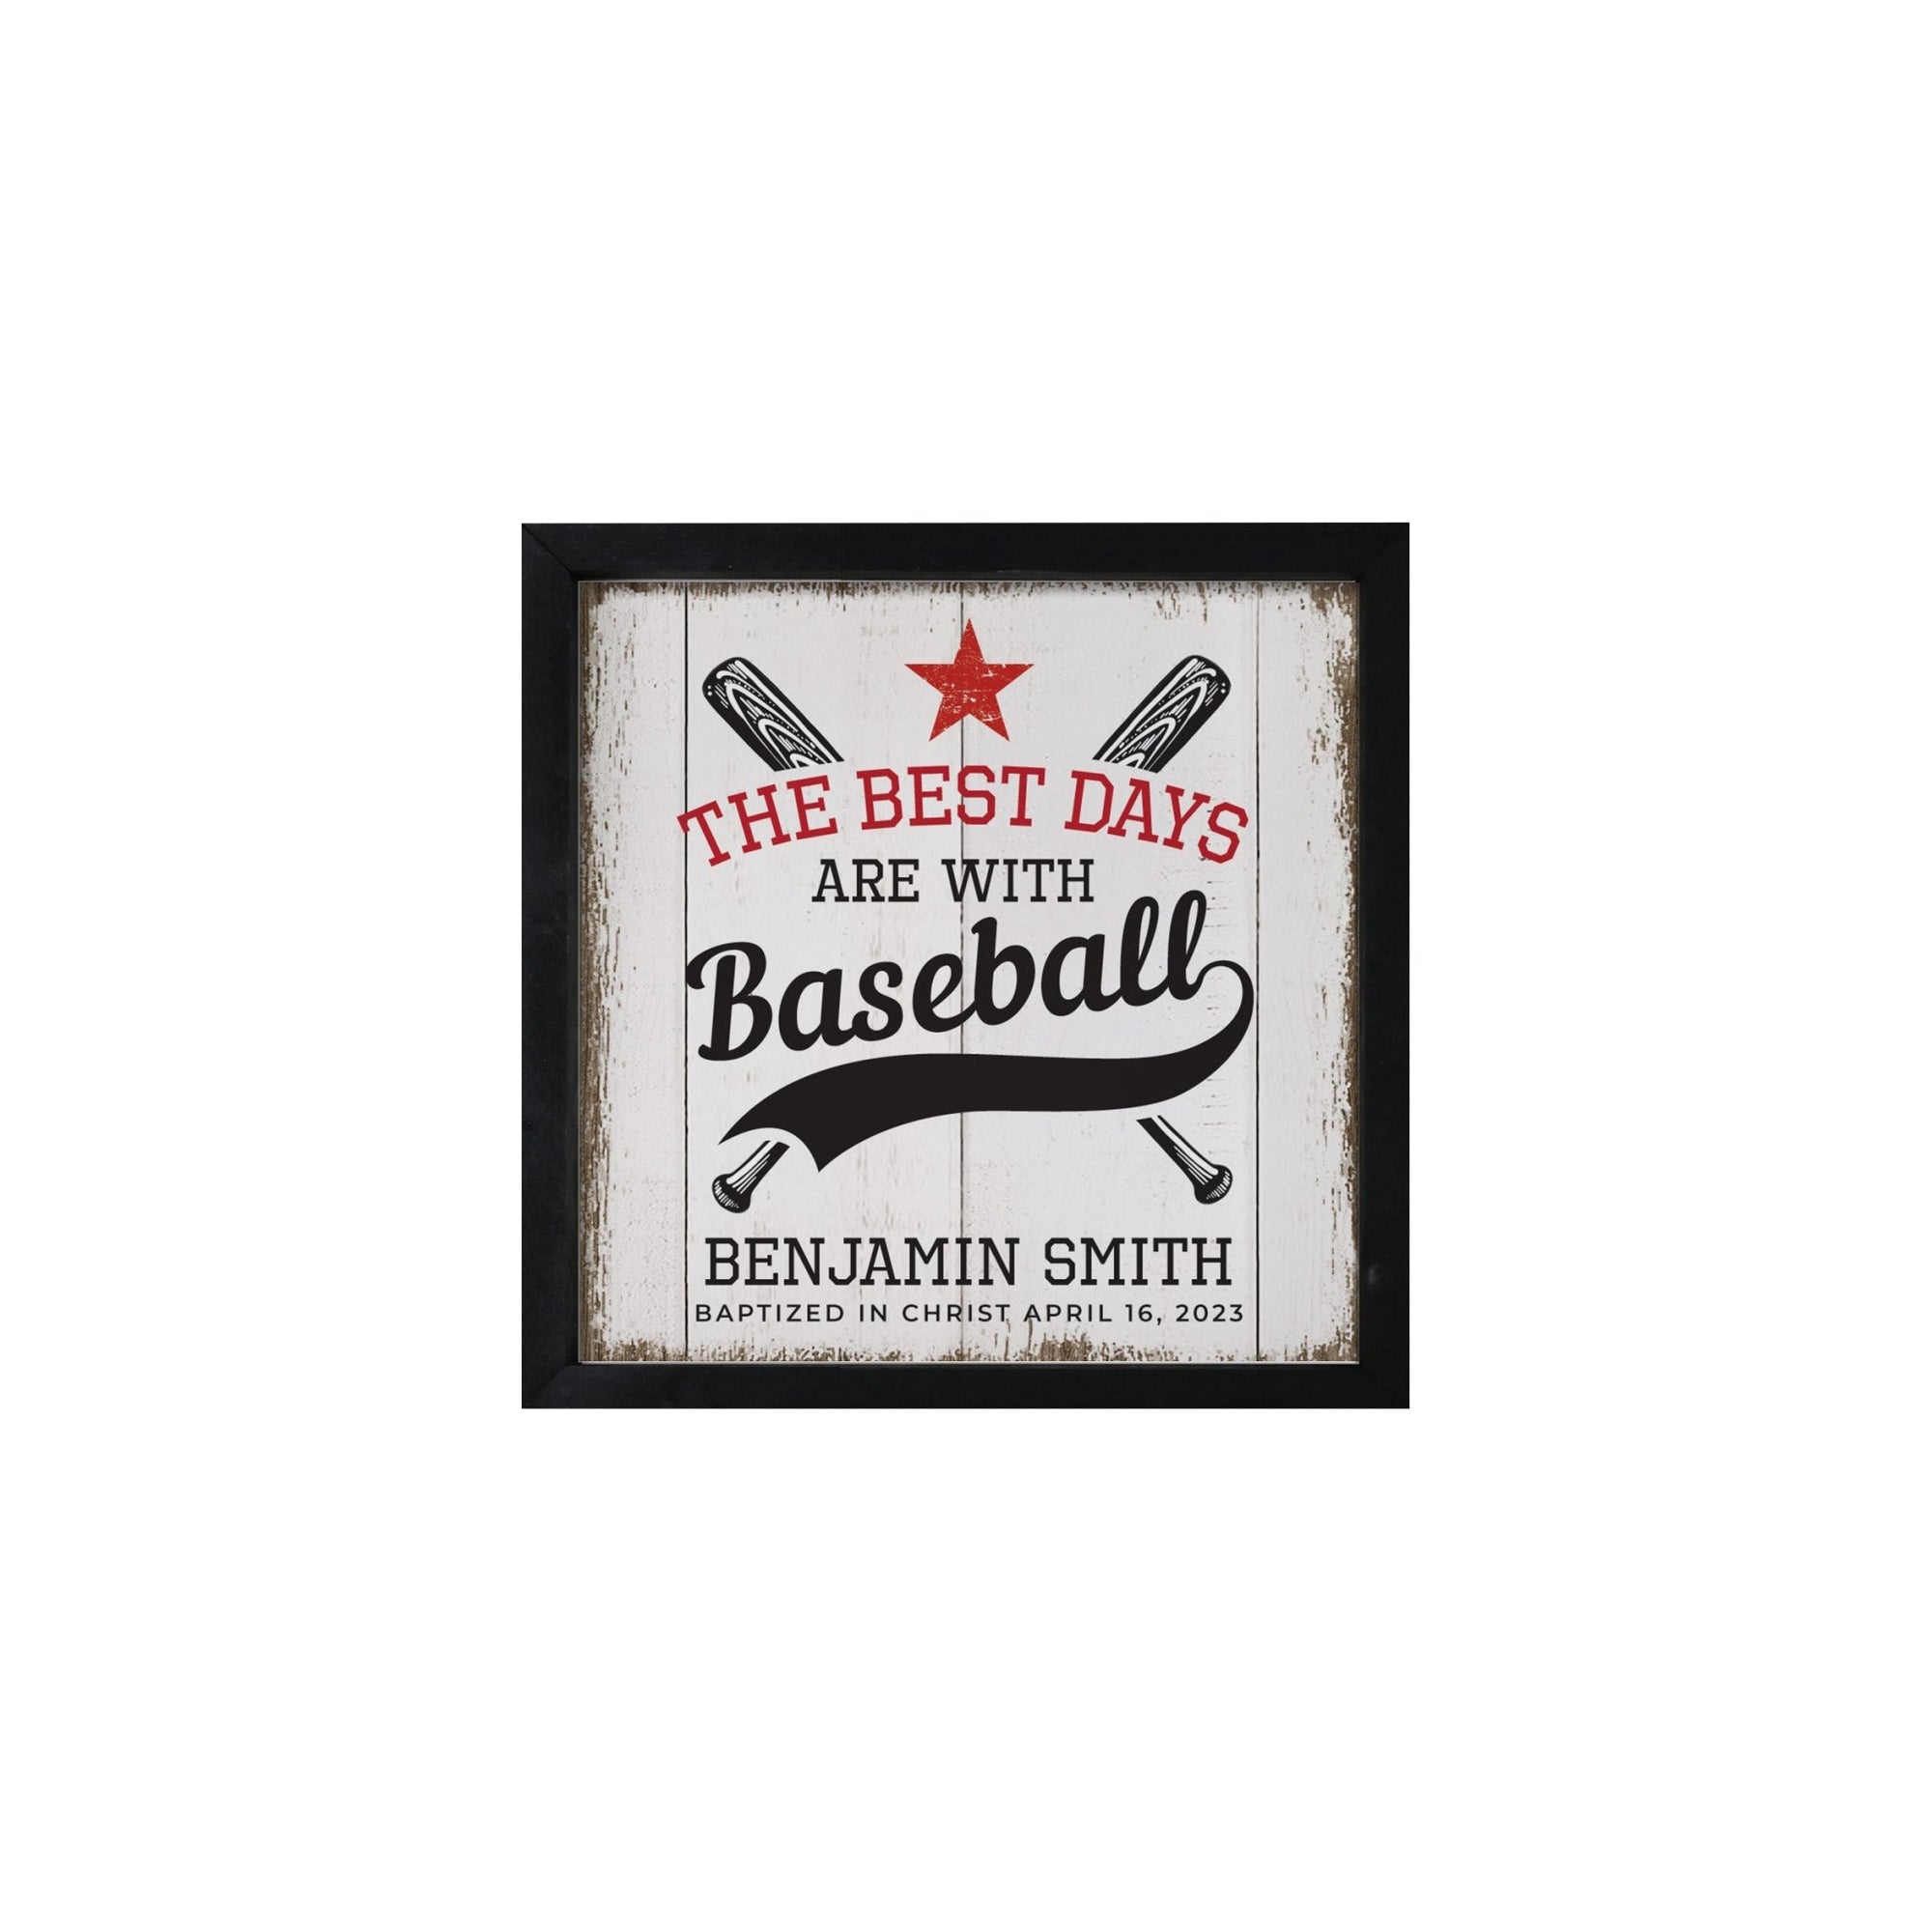 Personalized Rustic Wooden Baseball Shadow Box Shelf Décor With Inspiring Bible Verses - Balls, Bats, & Baseball Hats - LifeSong Milestones